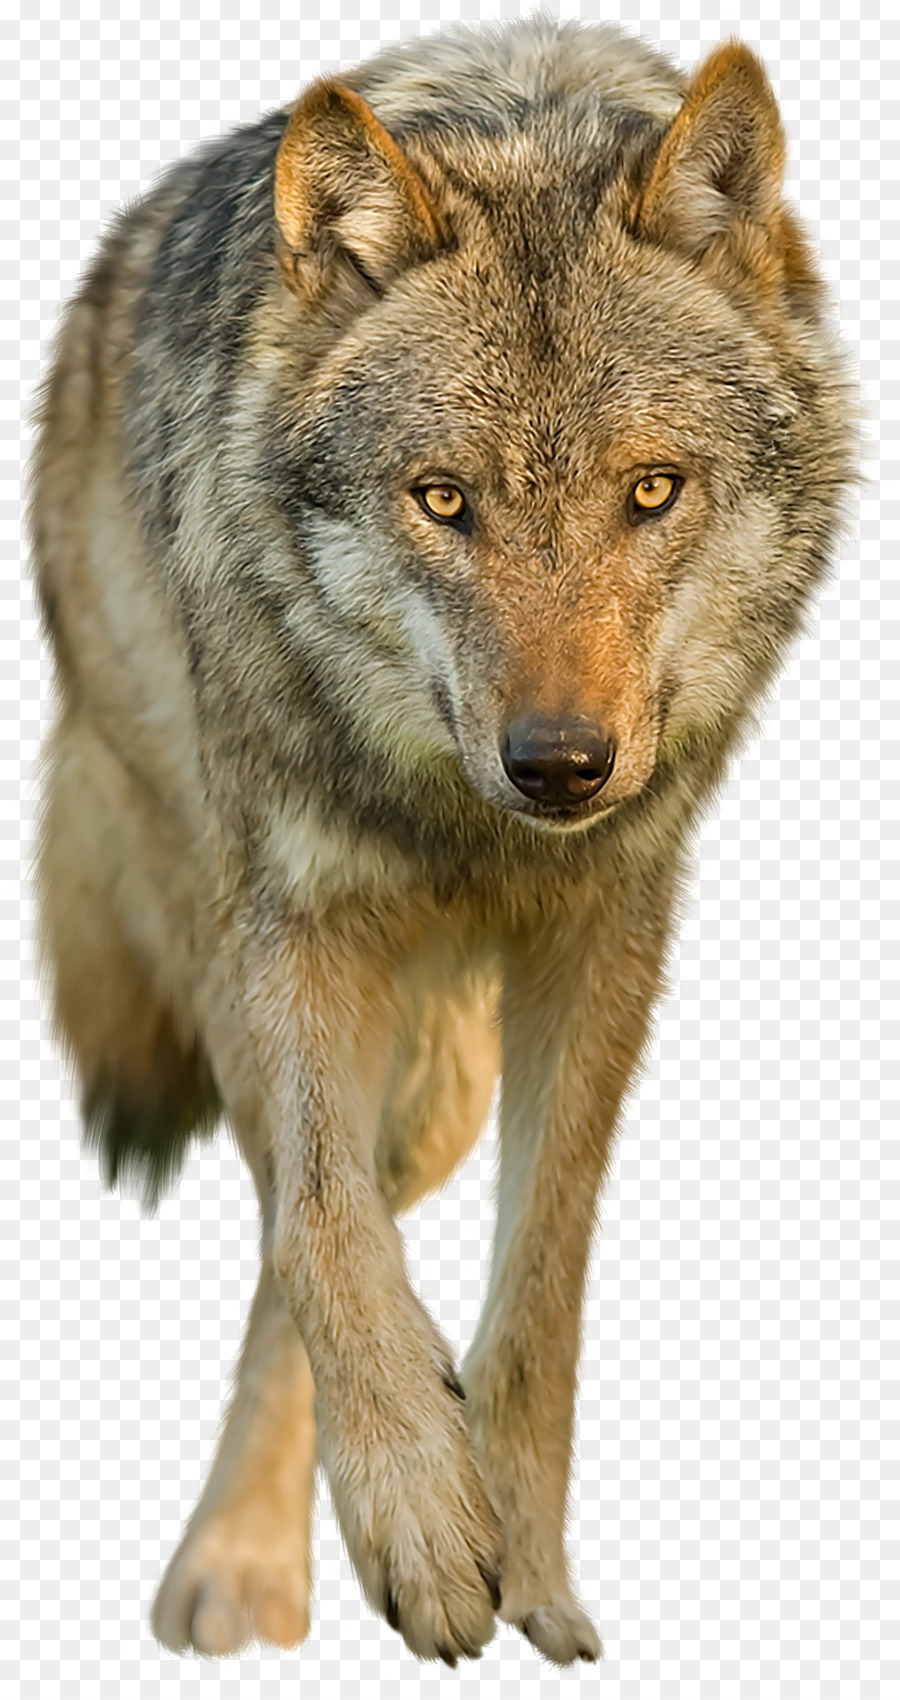 Dog Black wolf Clip art - wolf png download - 900*1689 - Free Transparent Dog png Download.